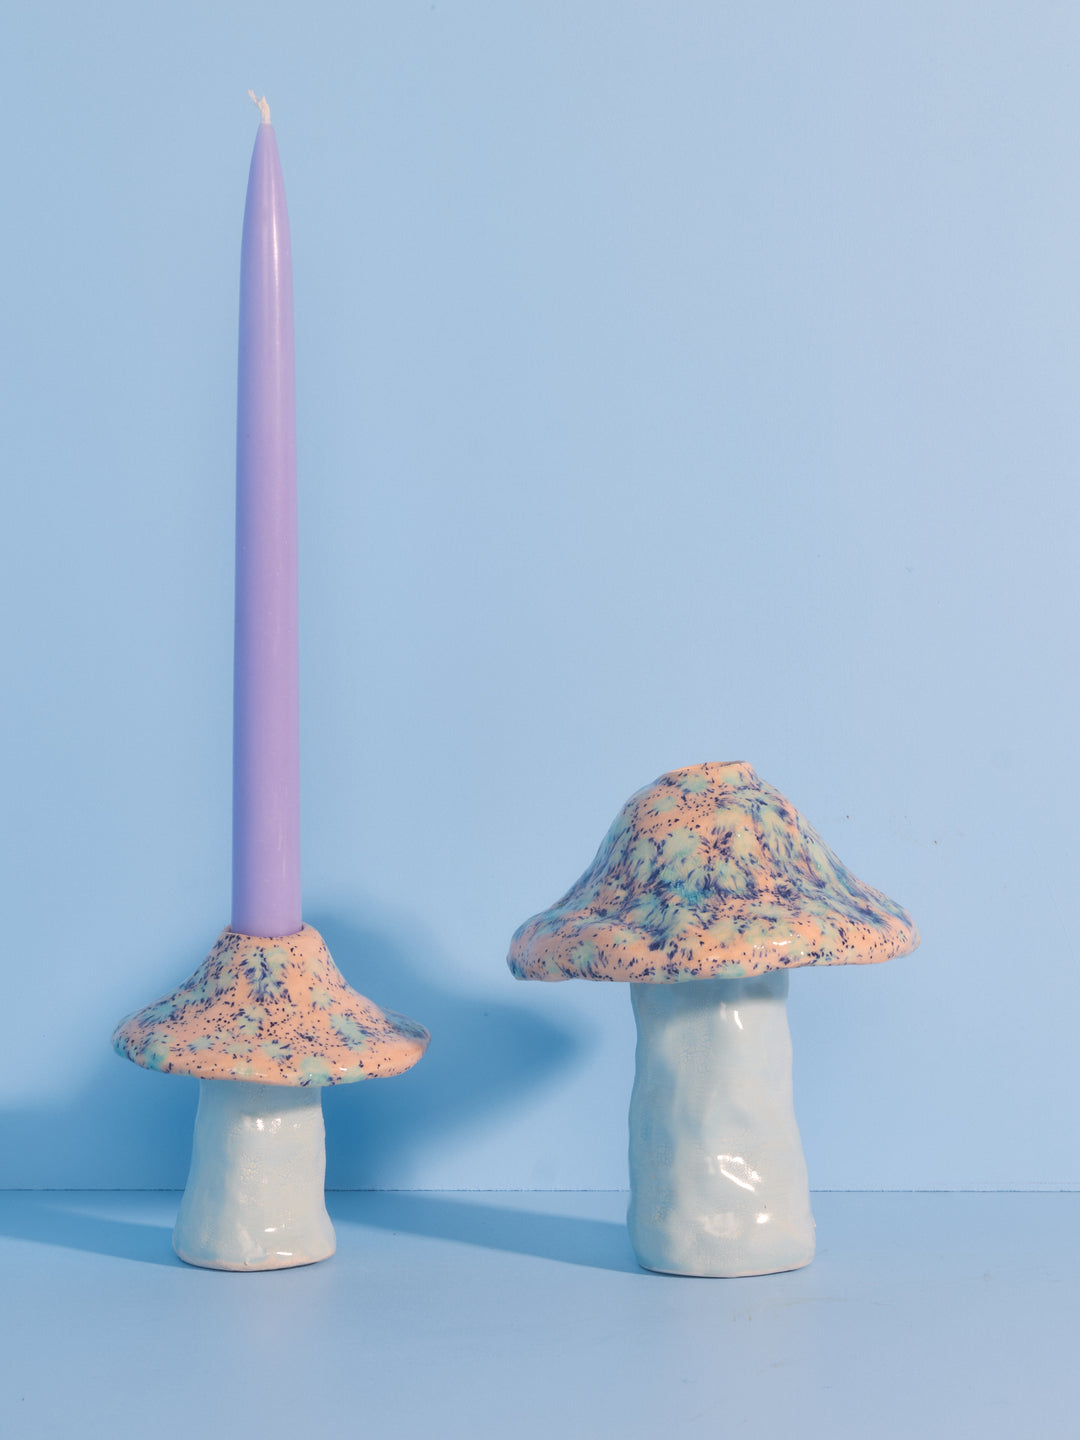 mushroom candles